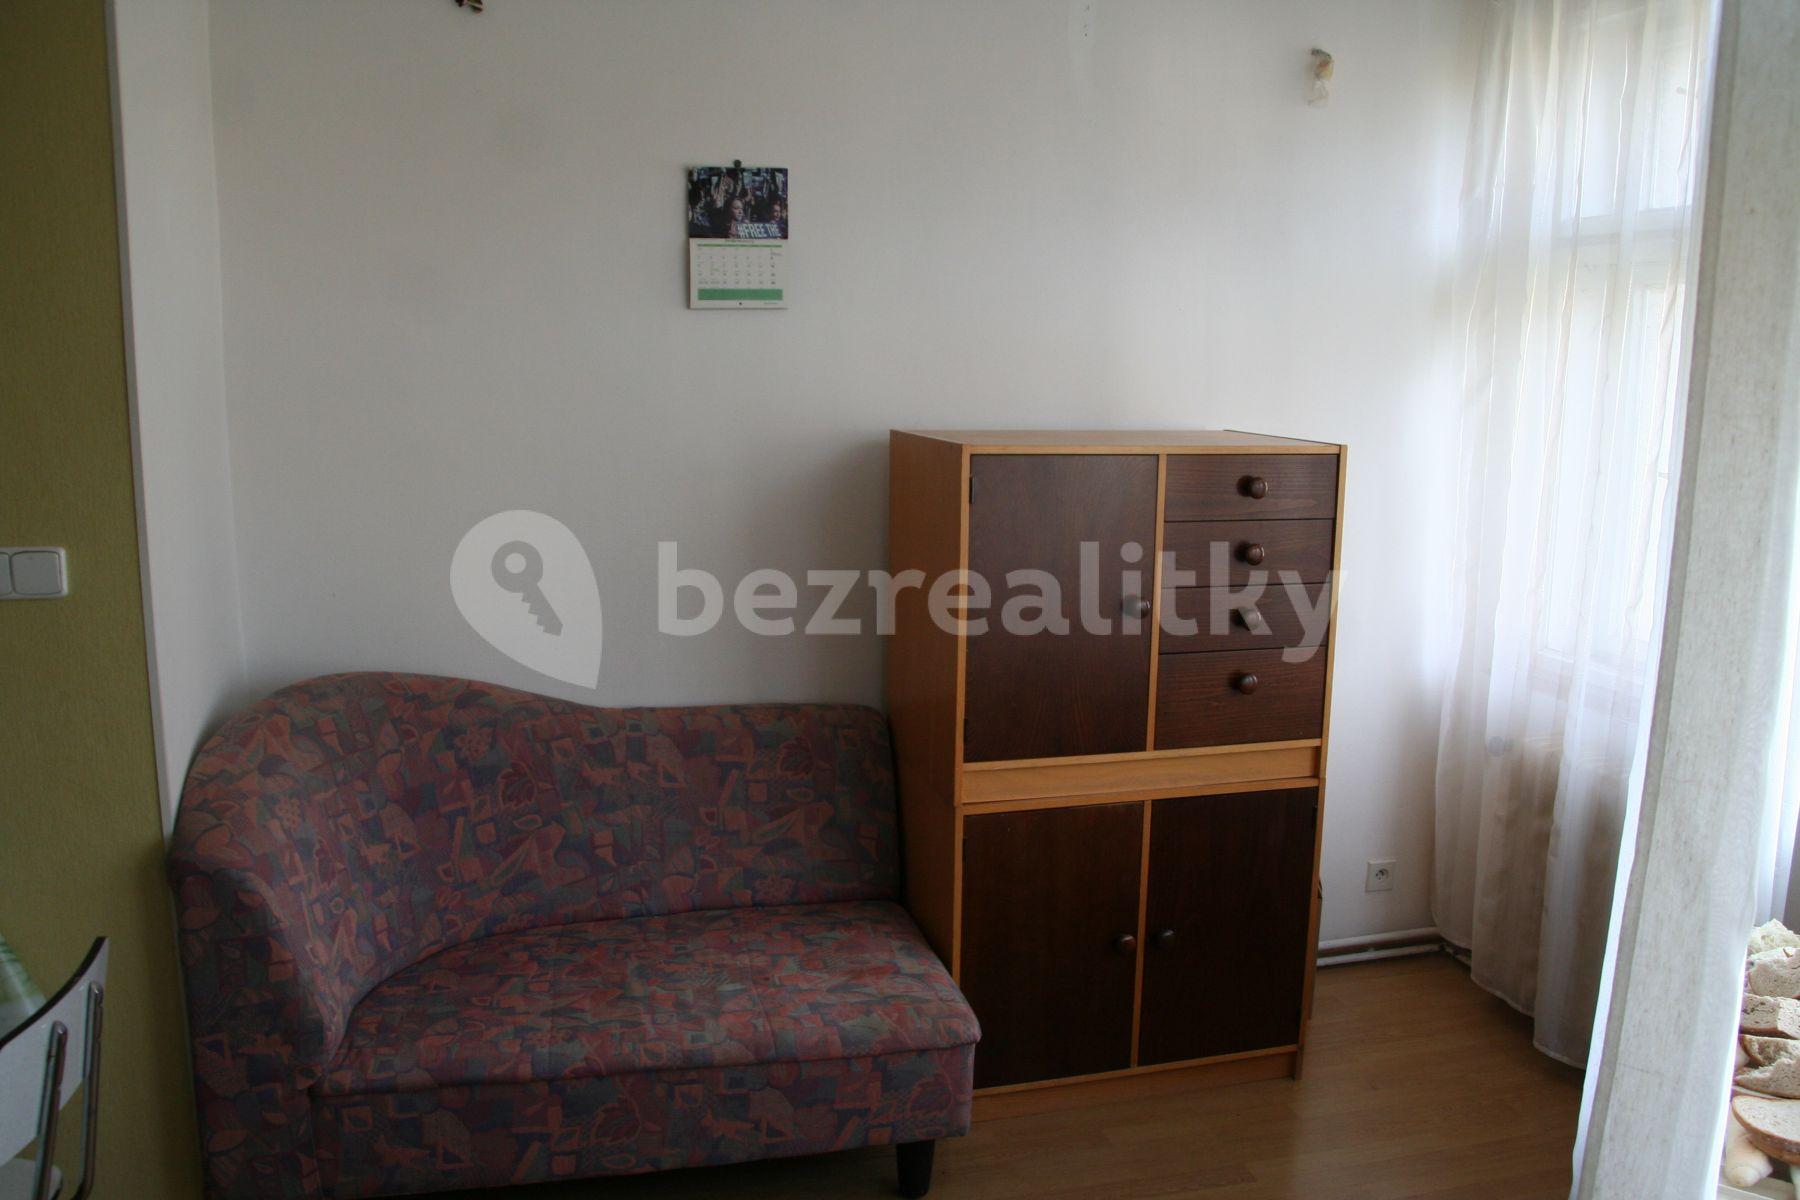 1 bedroom with open-plan kitchen flat to rent, 42 m², Jilmová, Prague, Prague